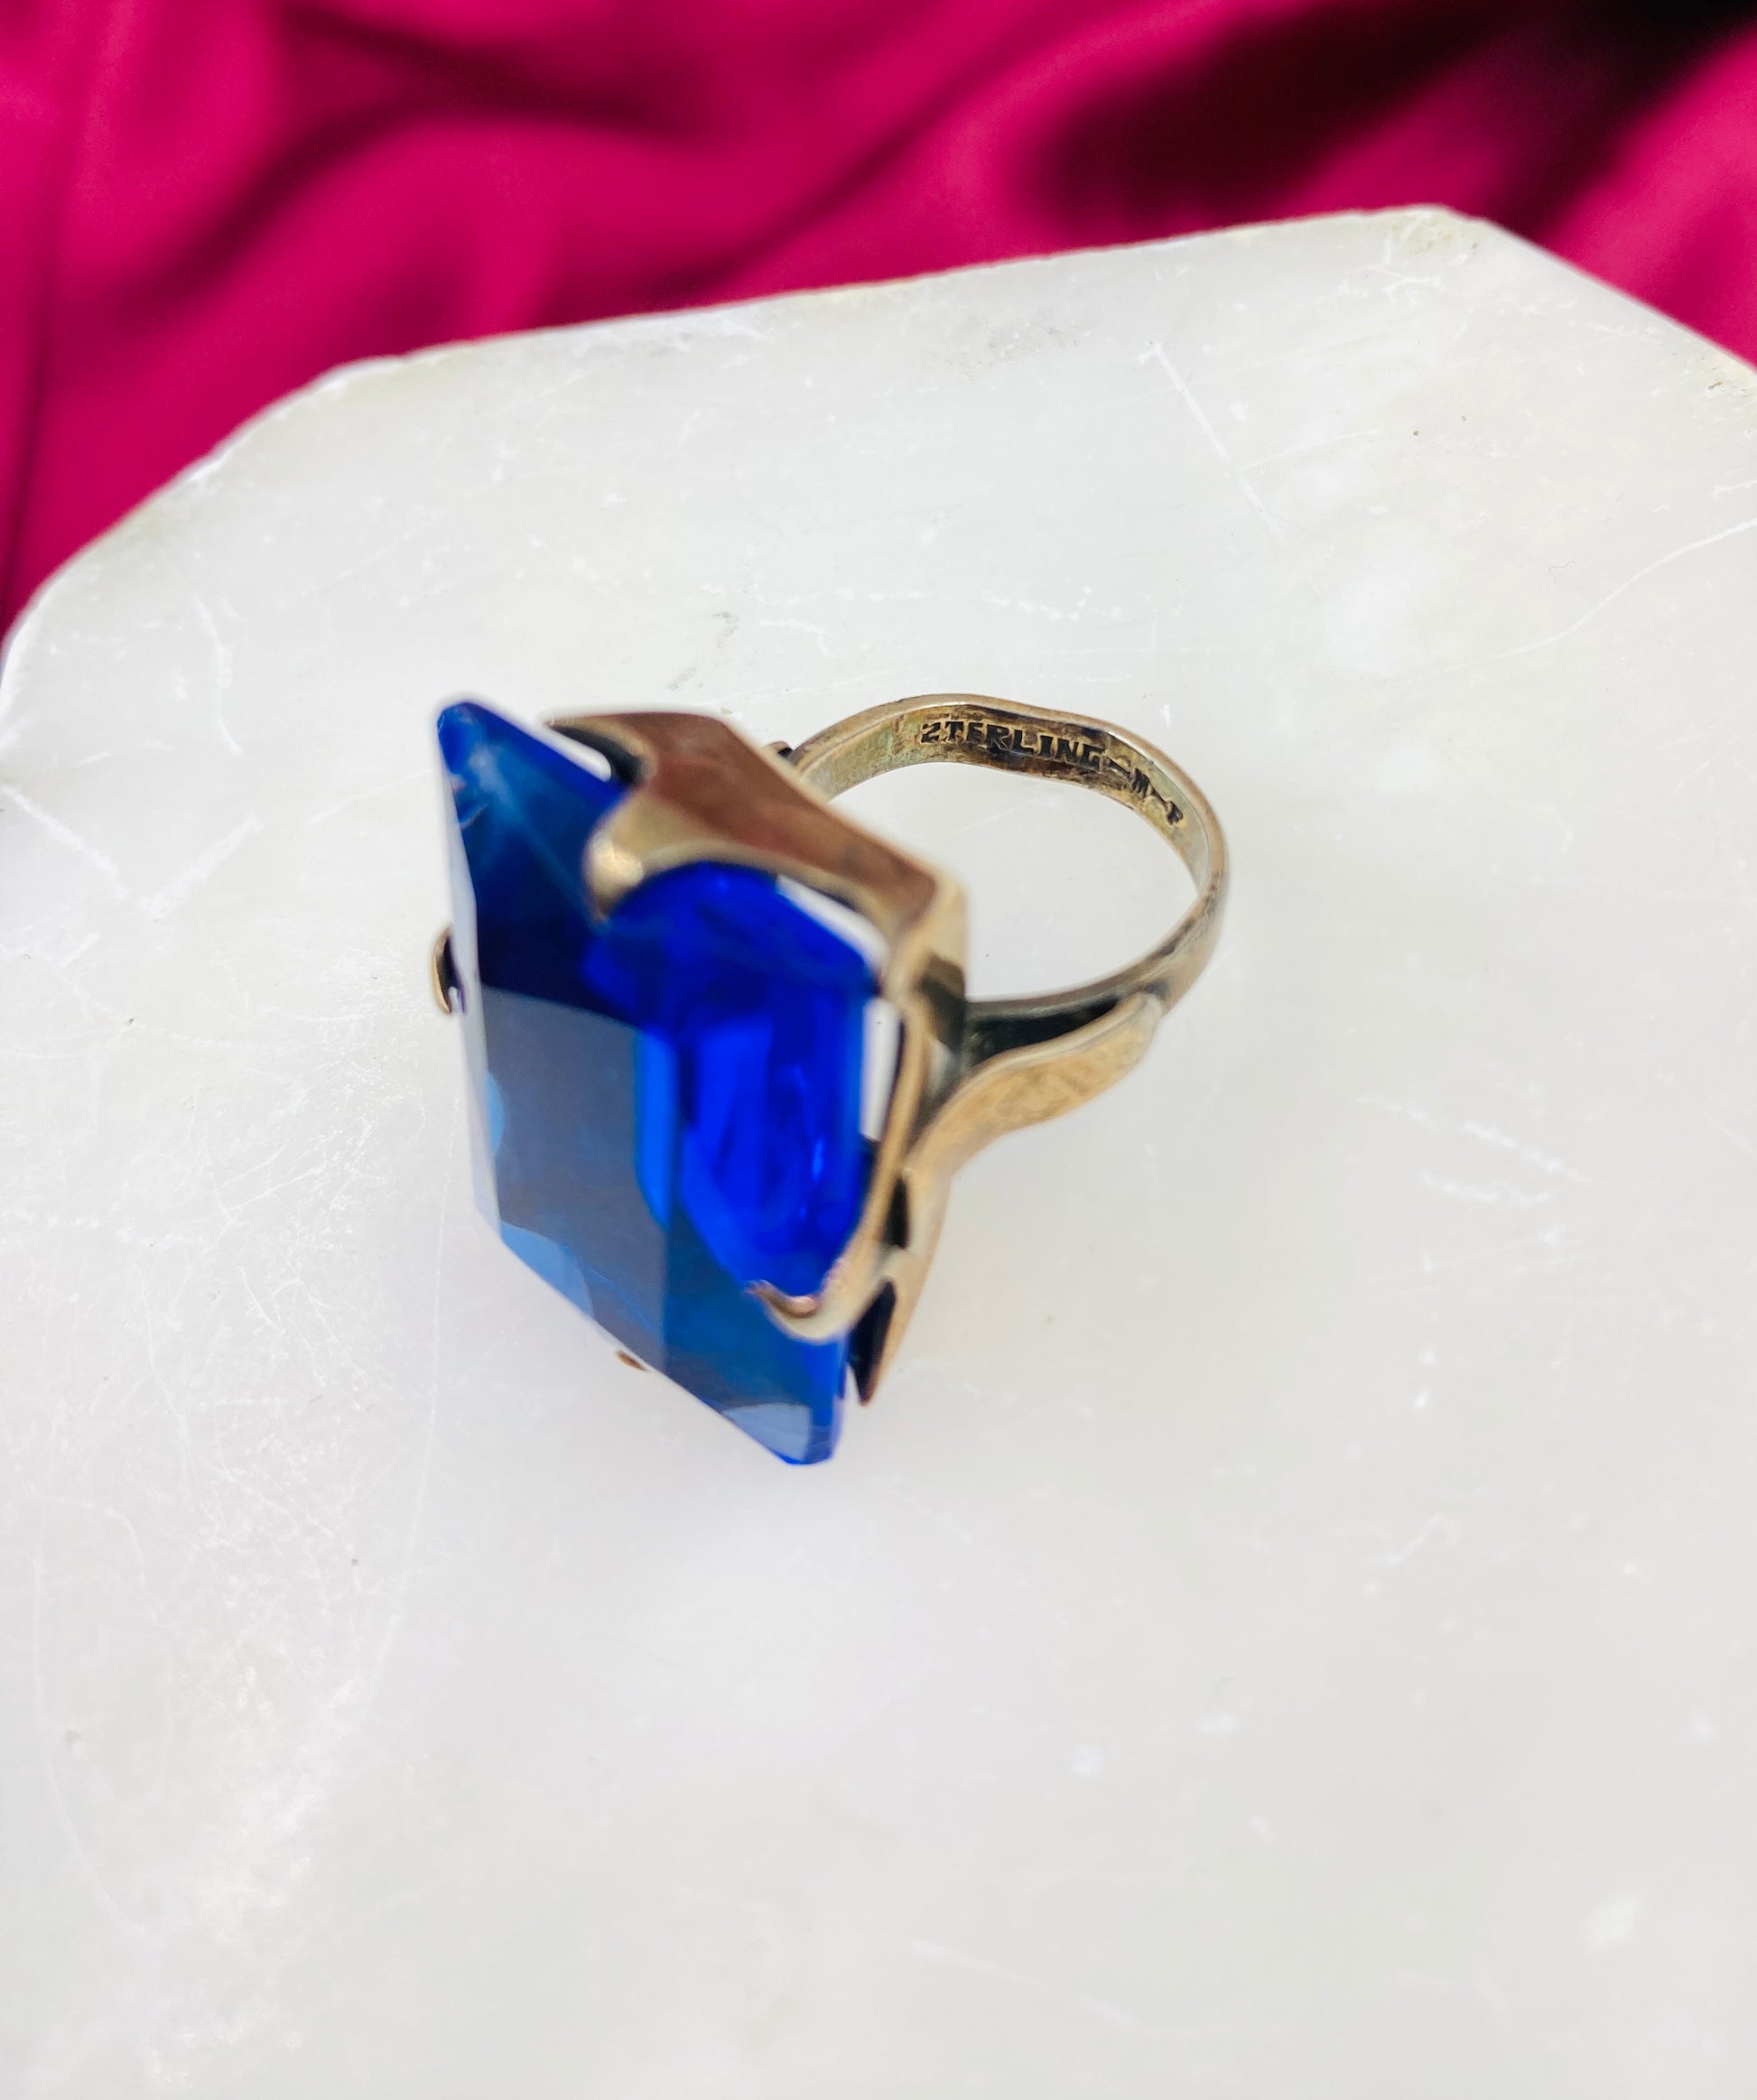 Vintage Art Deco Large Emerald Cut Blue Glass Stone Ring, Size 4.5